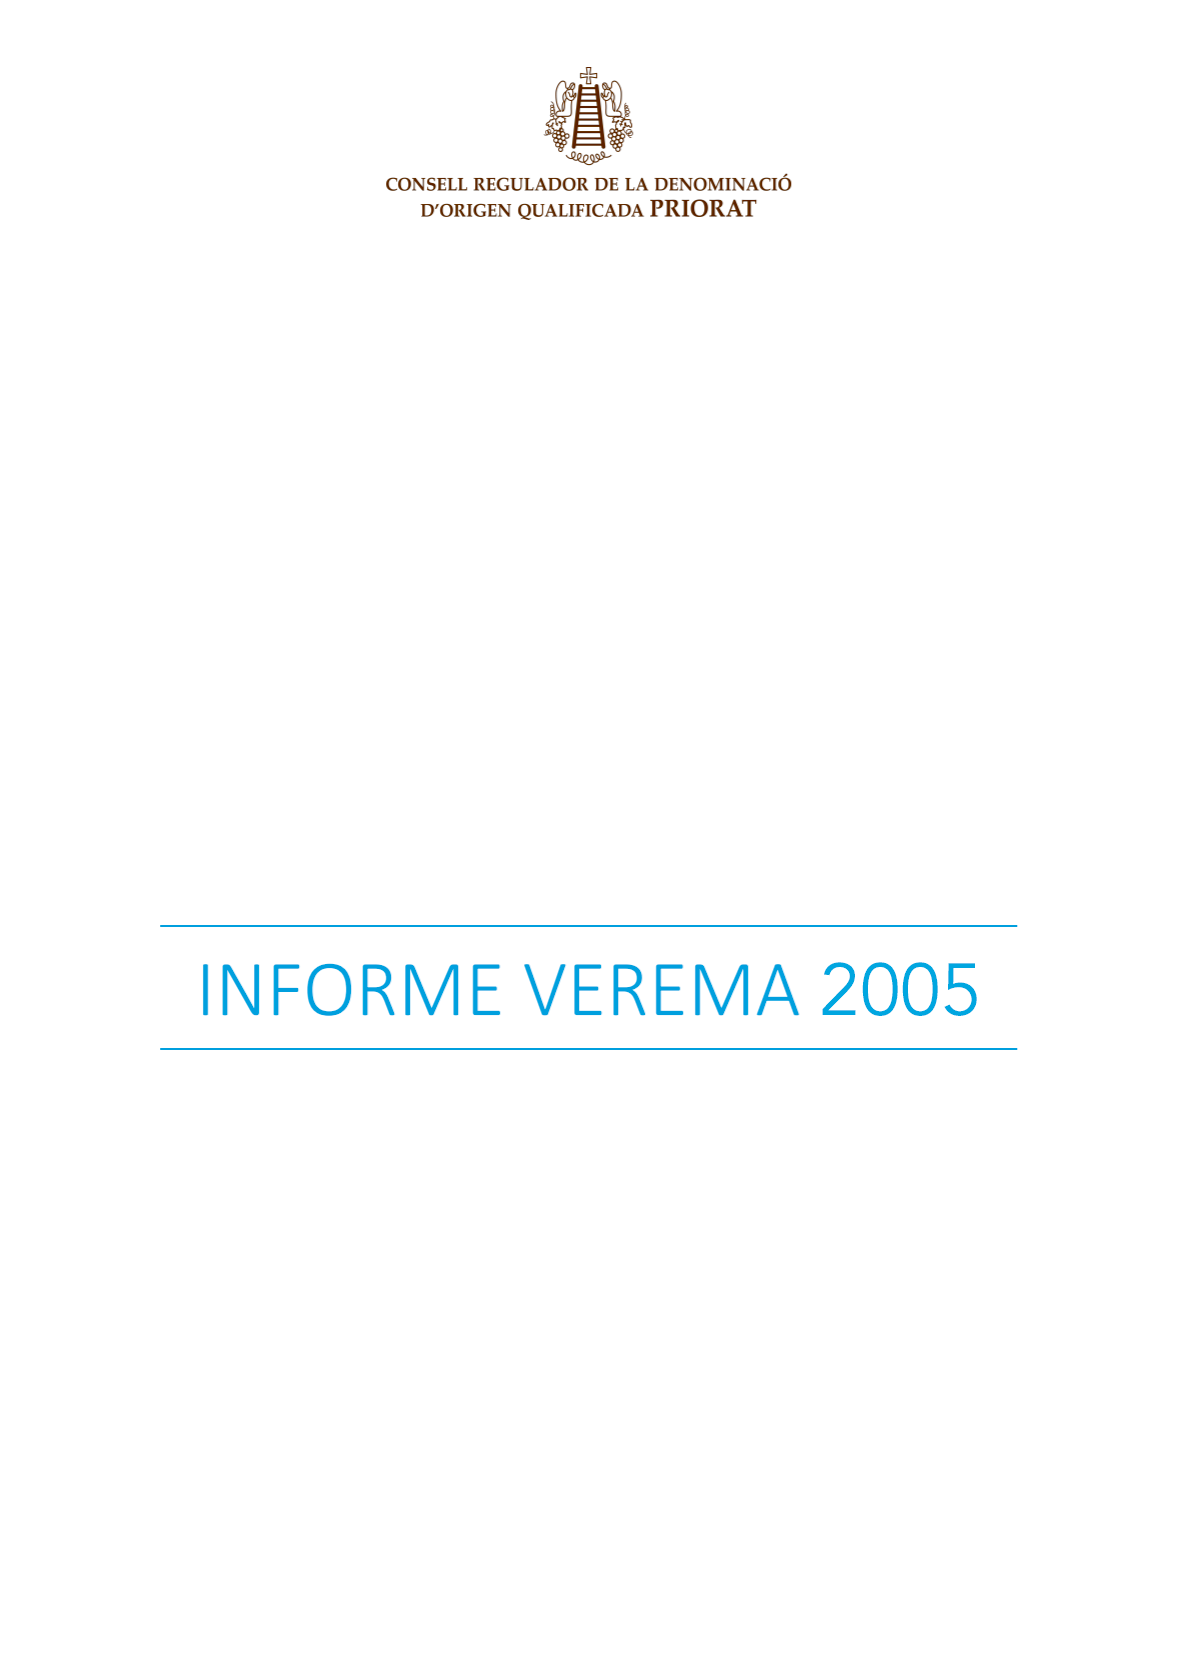 Informe de verema 2005